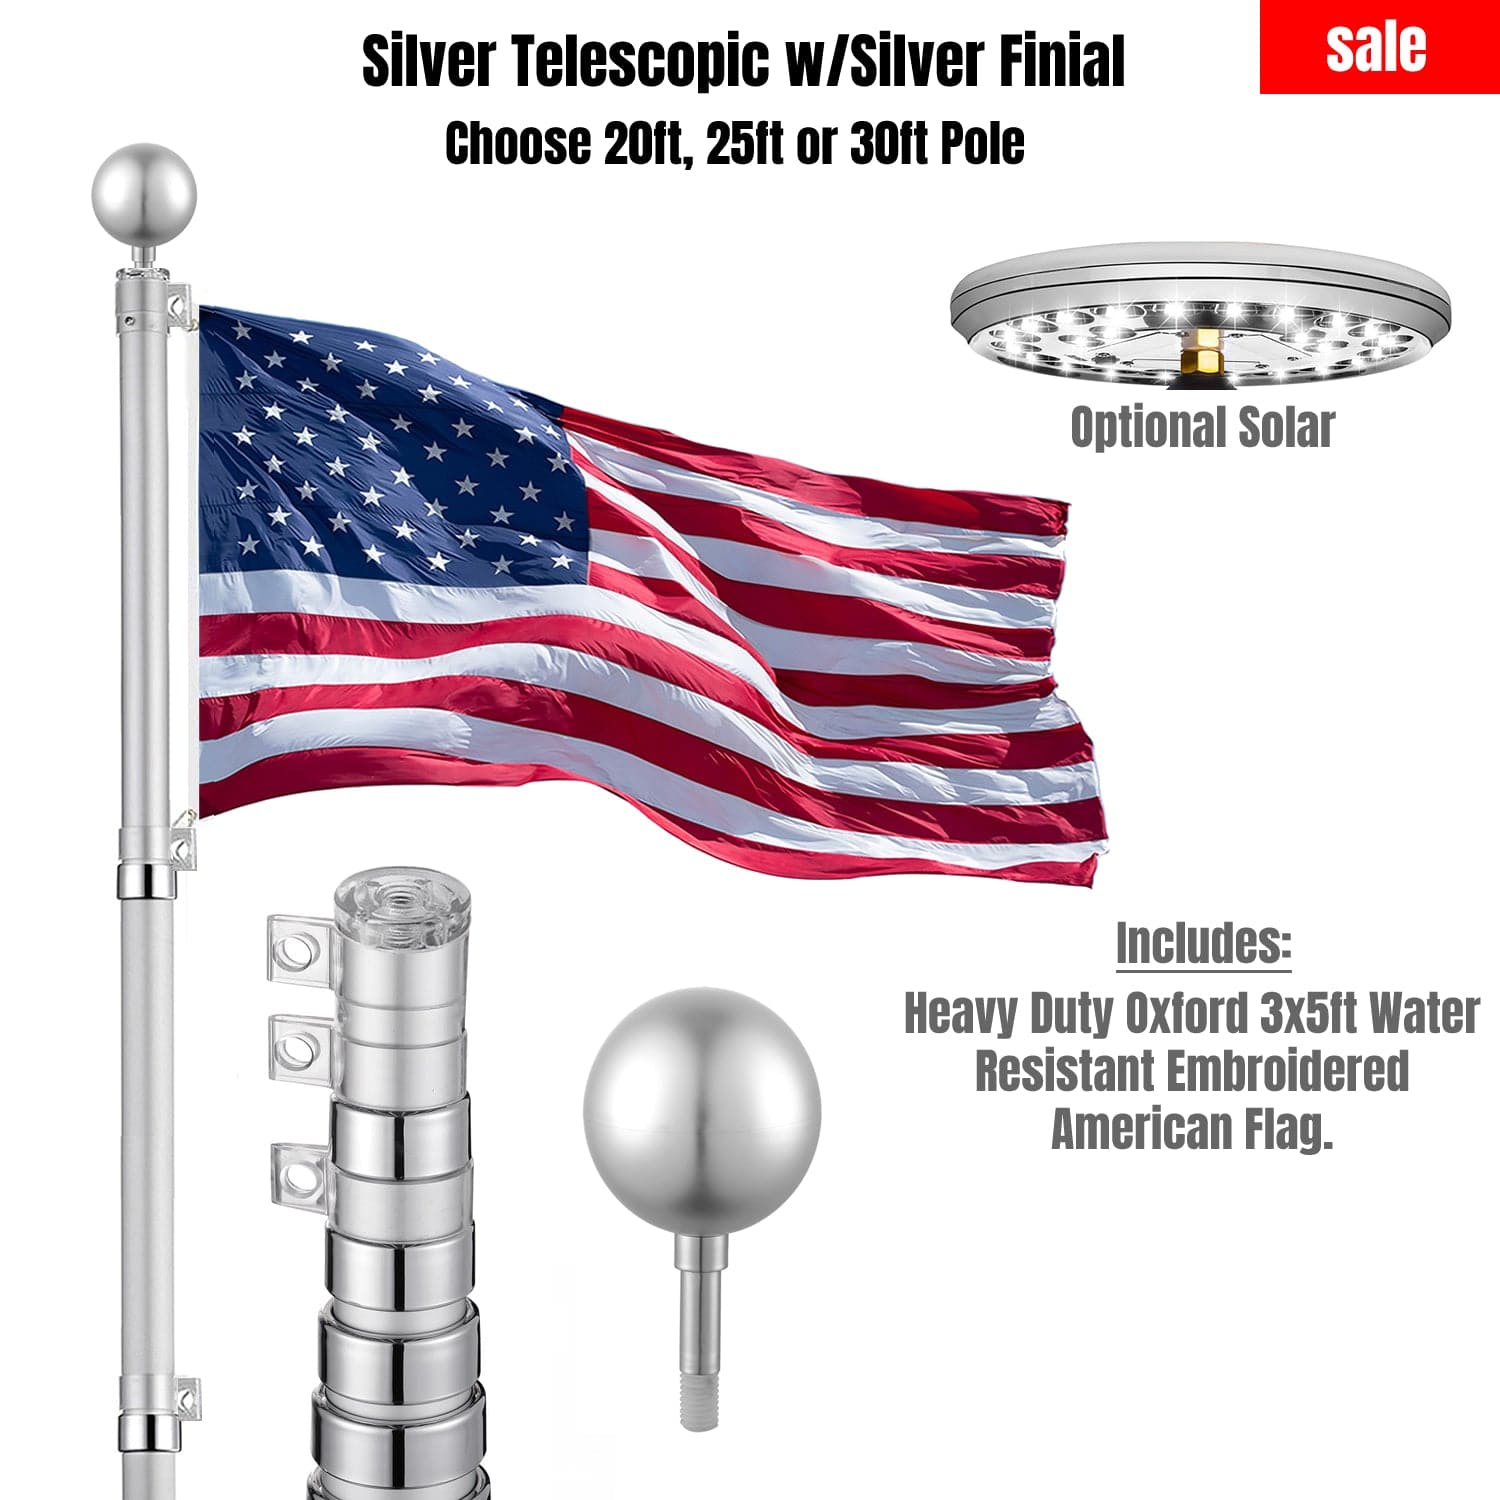 Silver Telescopic Flag Pole Kit w/ Silver Finial